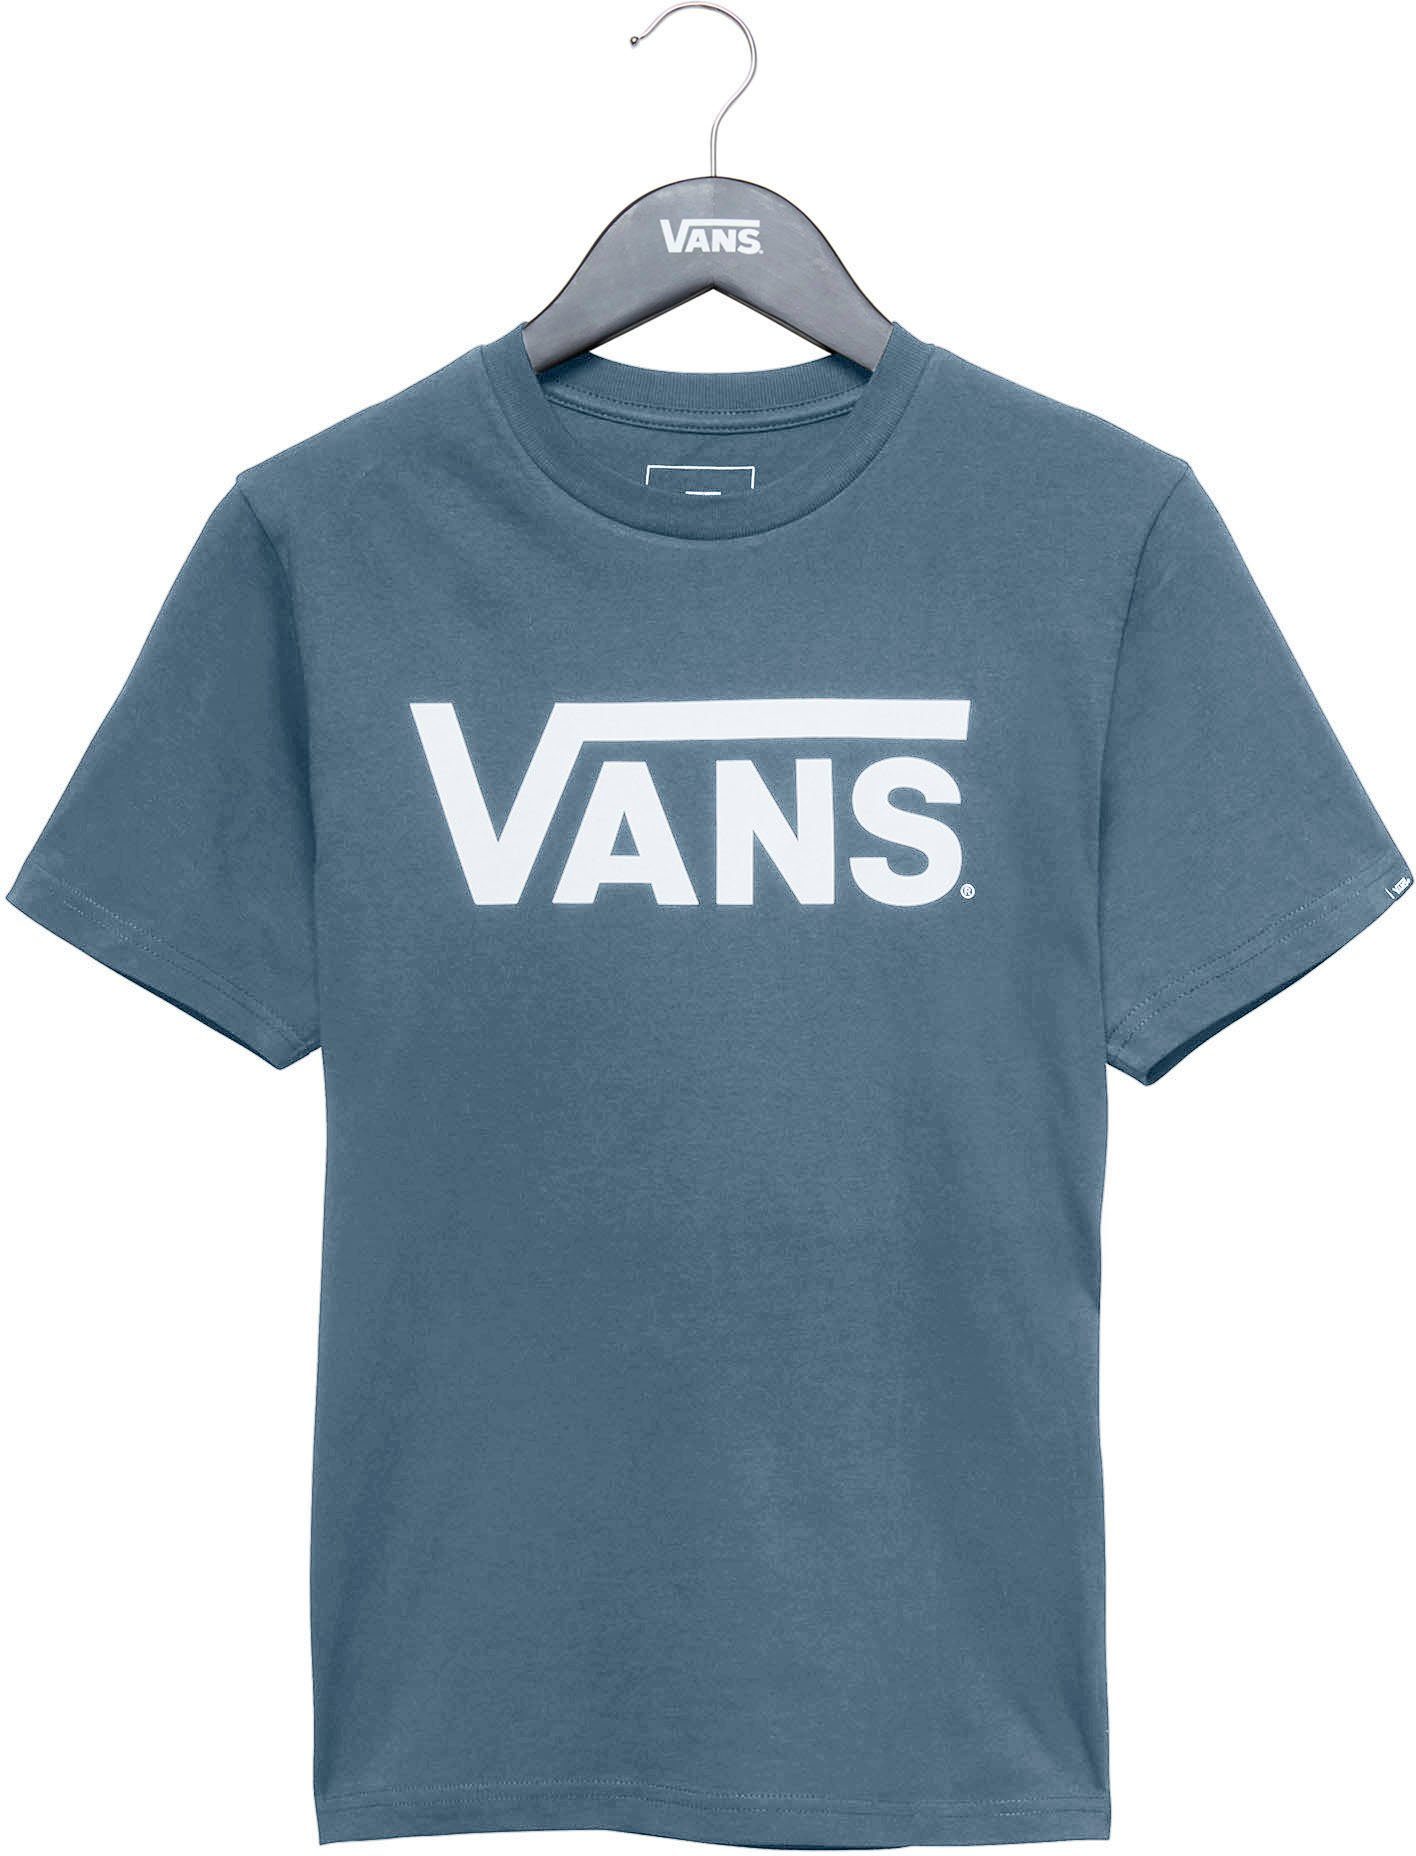 VANS BOYS T-Shirt bluestone Vans CLASSIC